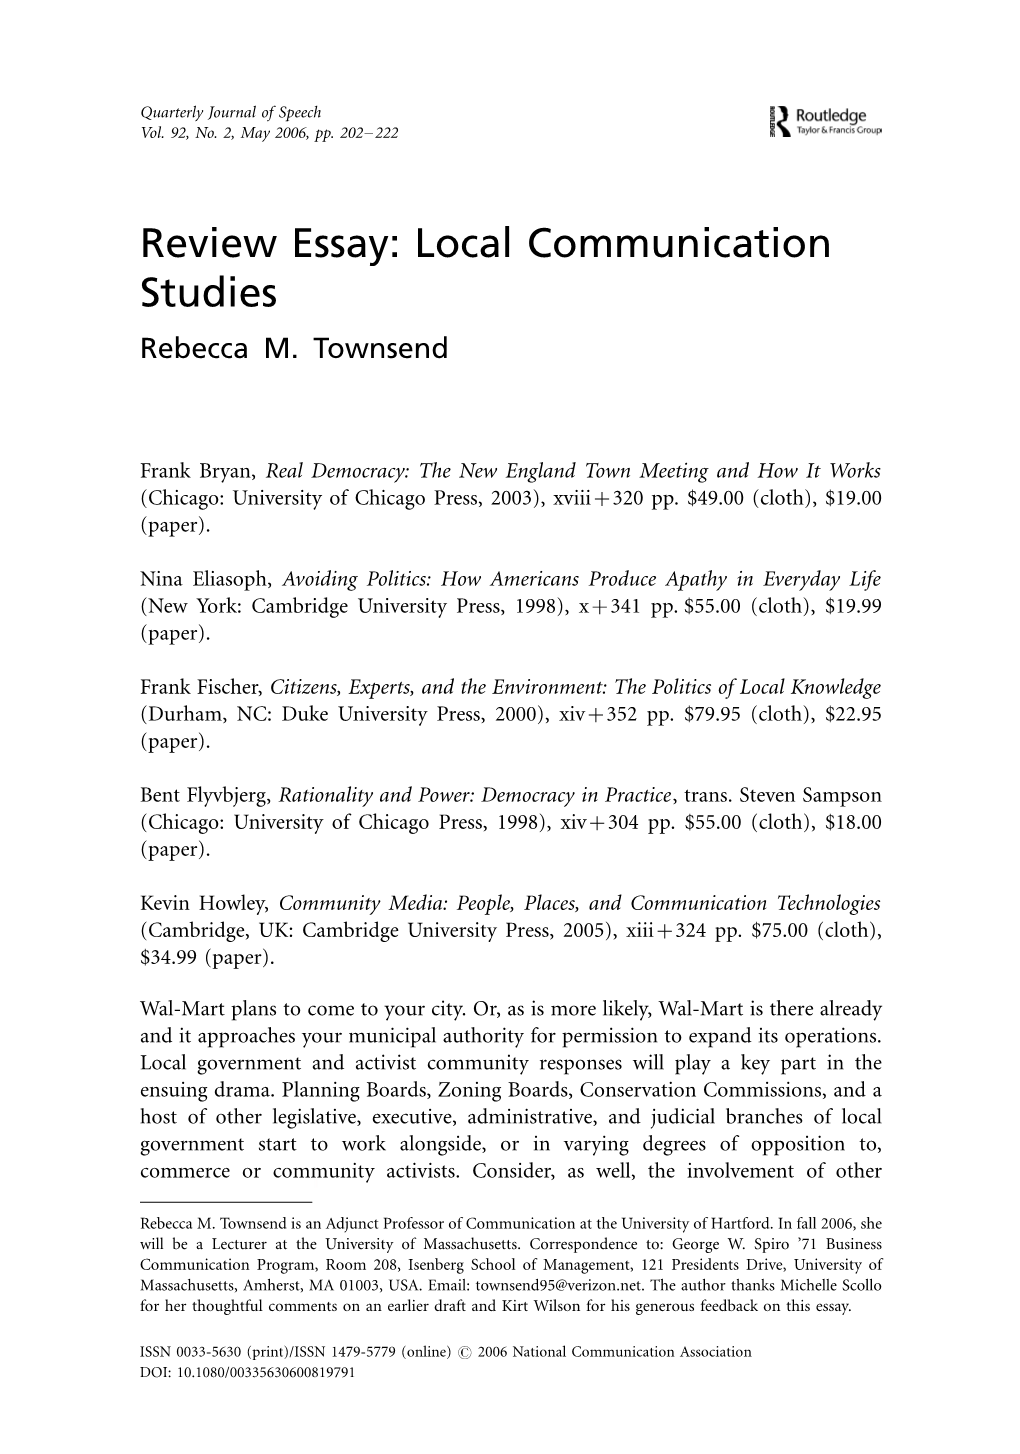 Review Essay: Local Communication Studies Rebecca M